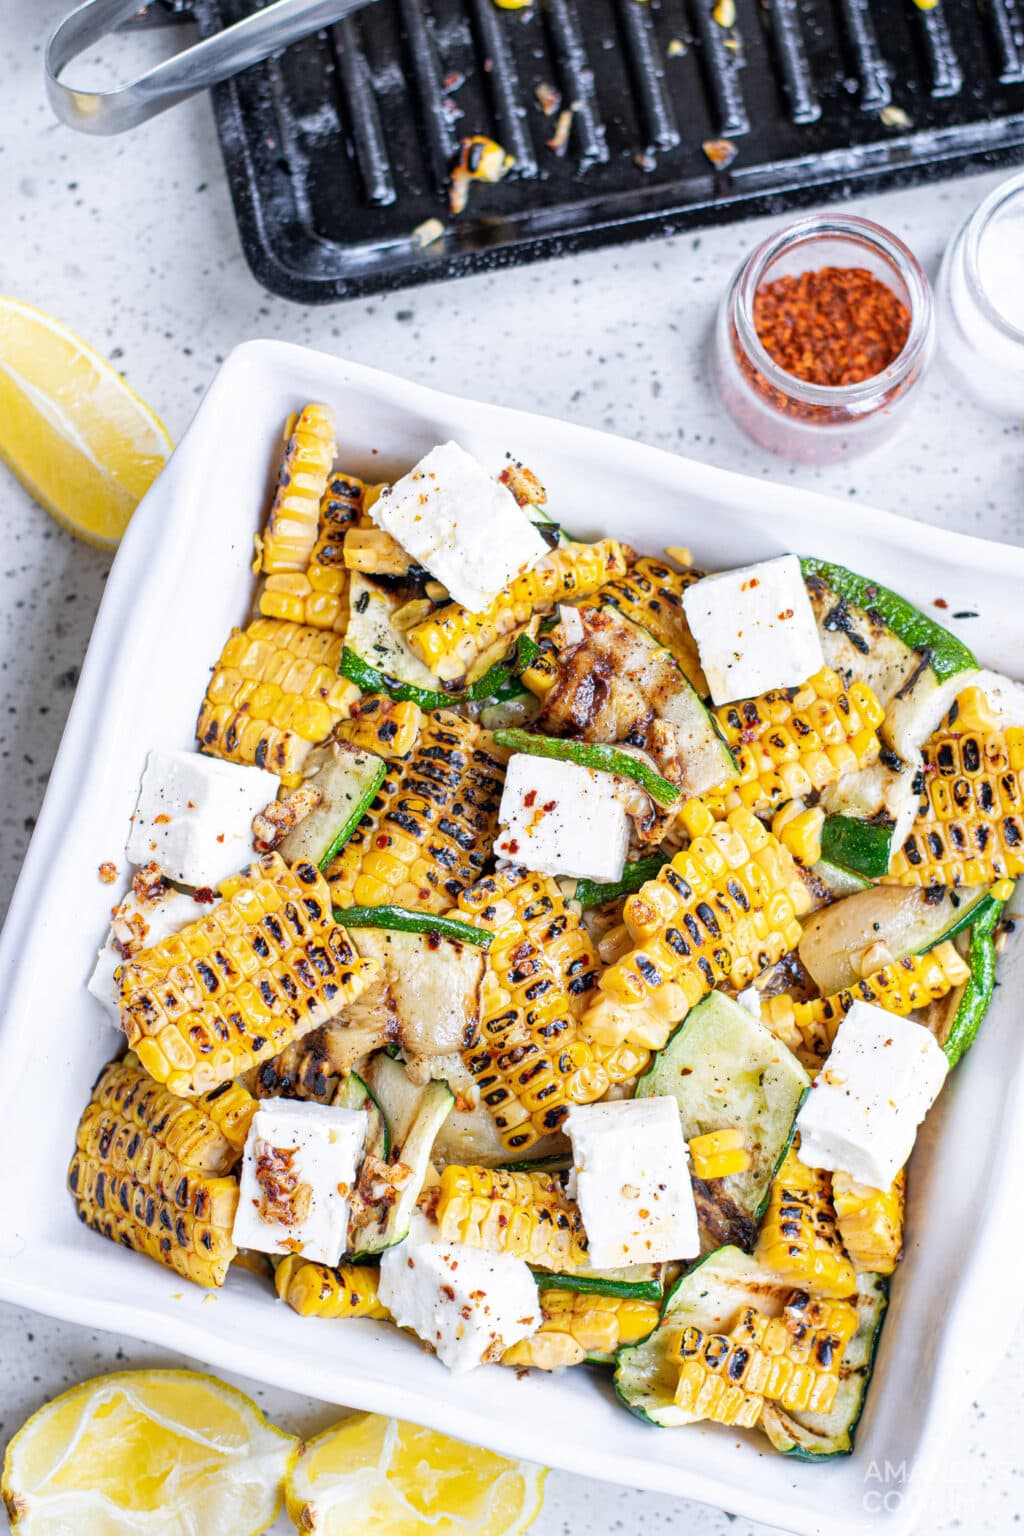 Grilled Corn & Zucchini Salad with Feta - Amanda's Cookin' - Salads